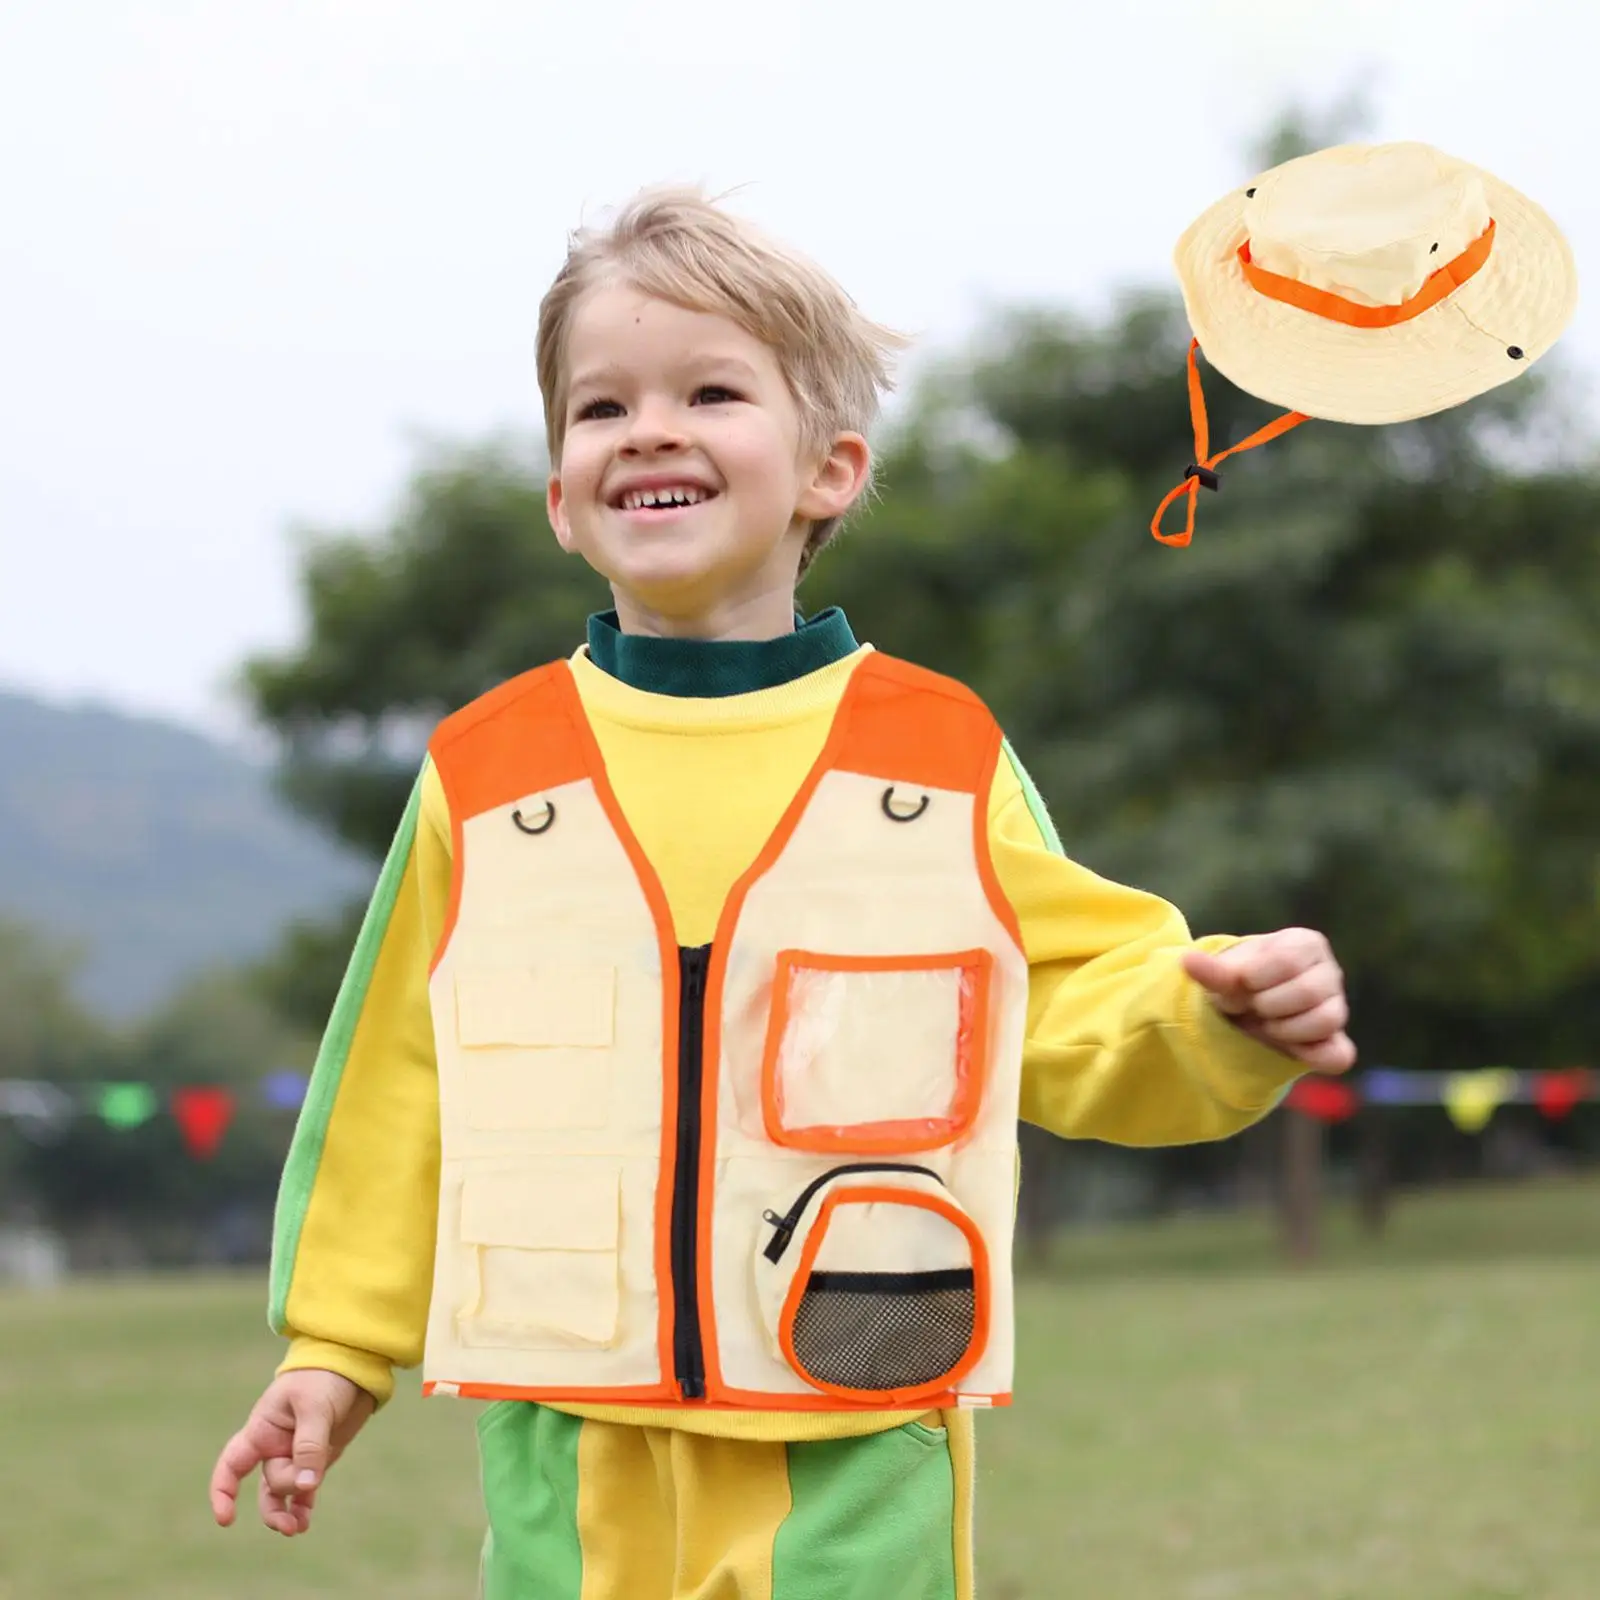 Kids Outdoor Explorer Kit Stage Performances Costume for Children Girls Boys